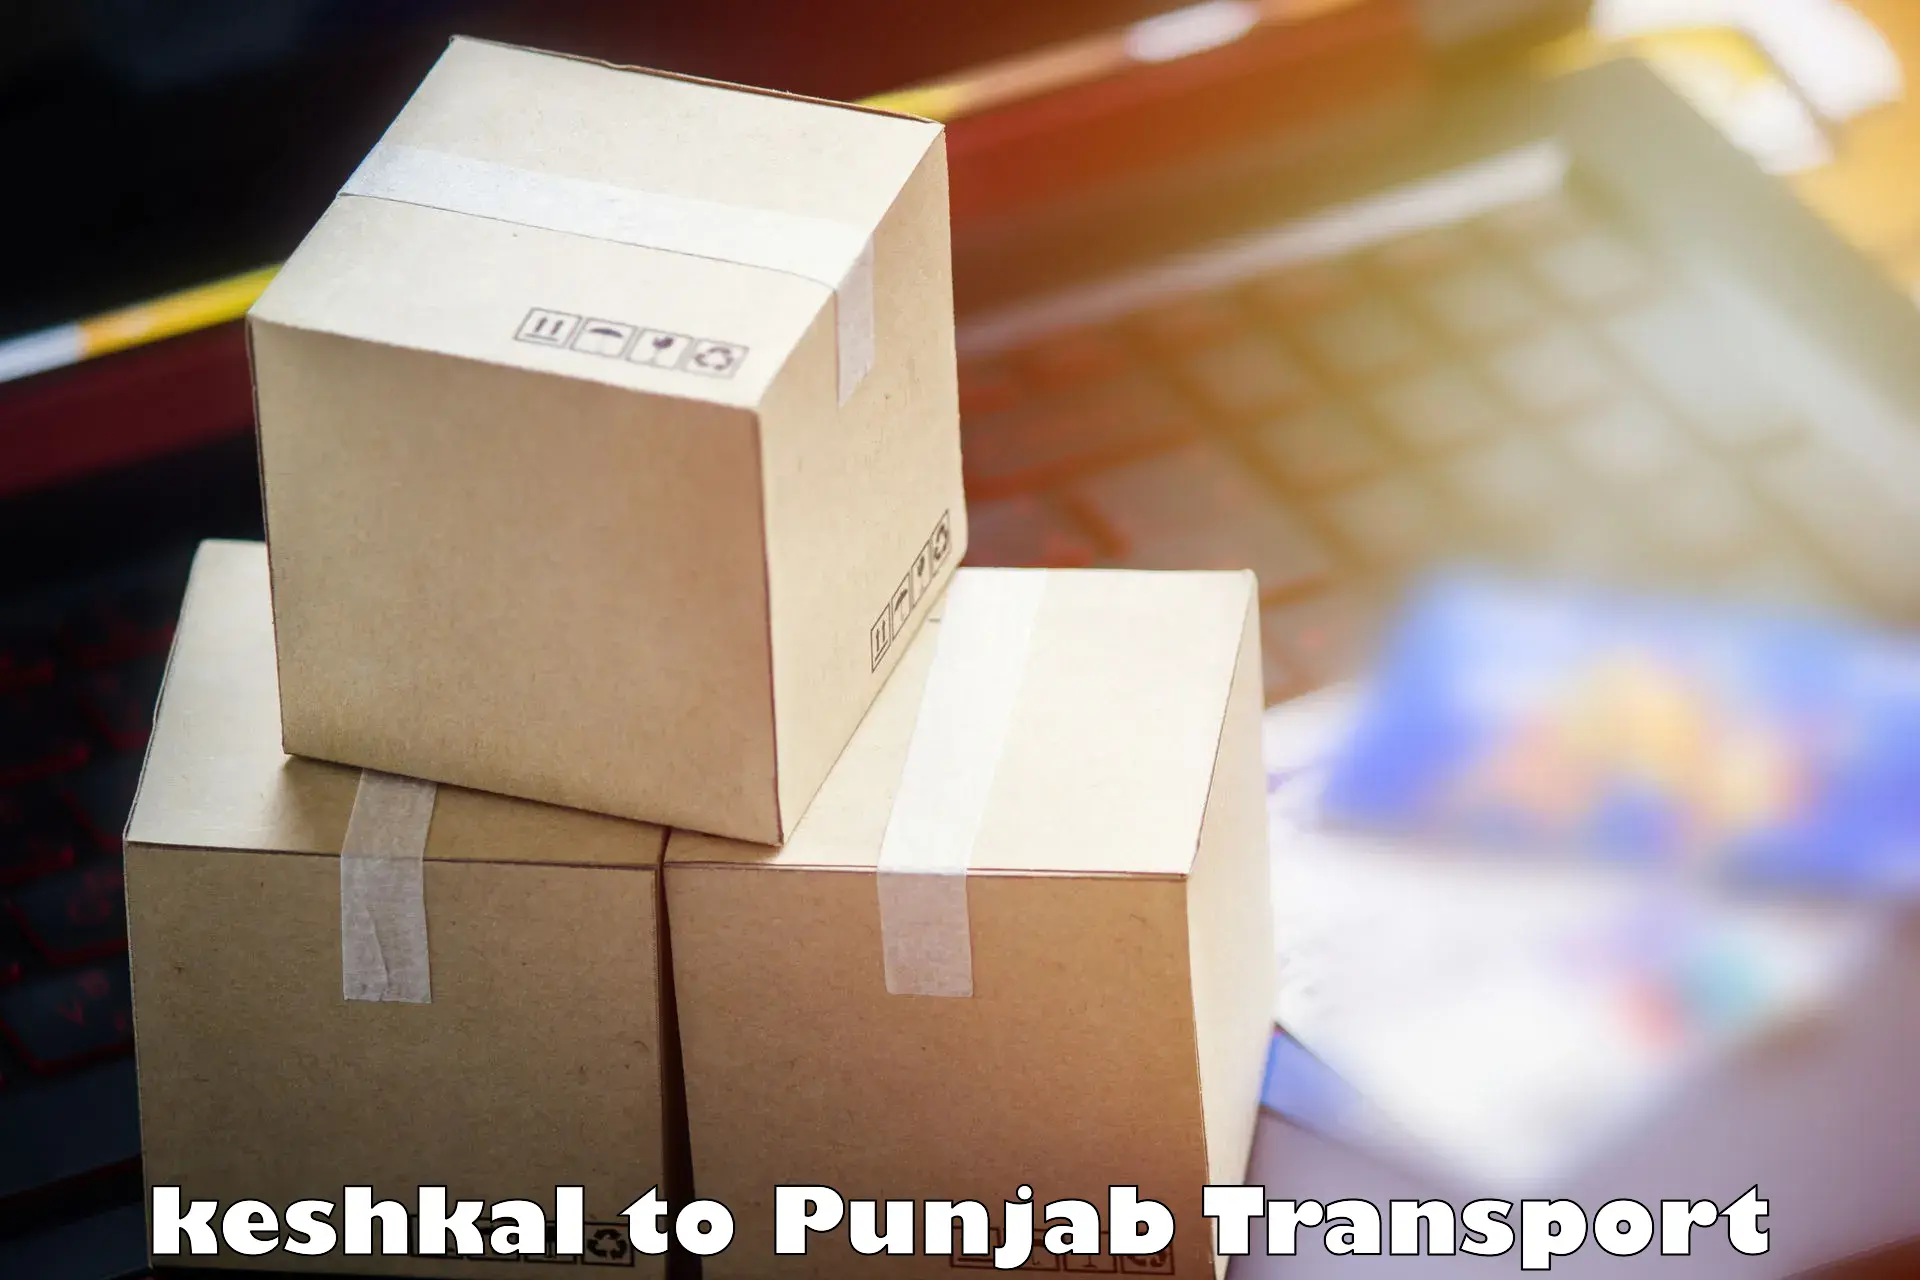 Commercial transport service keshkal to Punjab